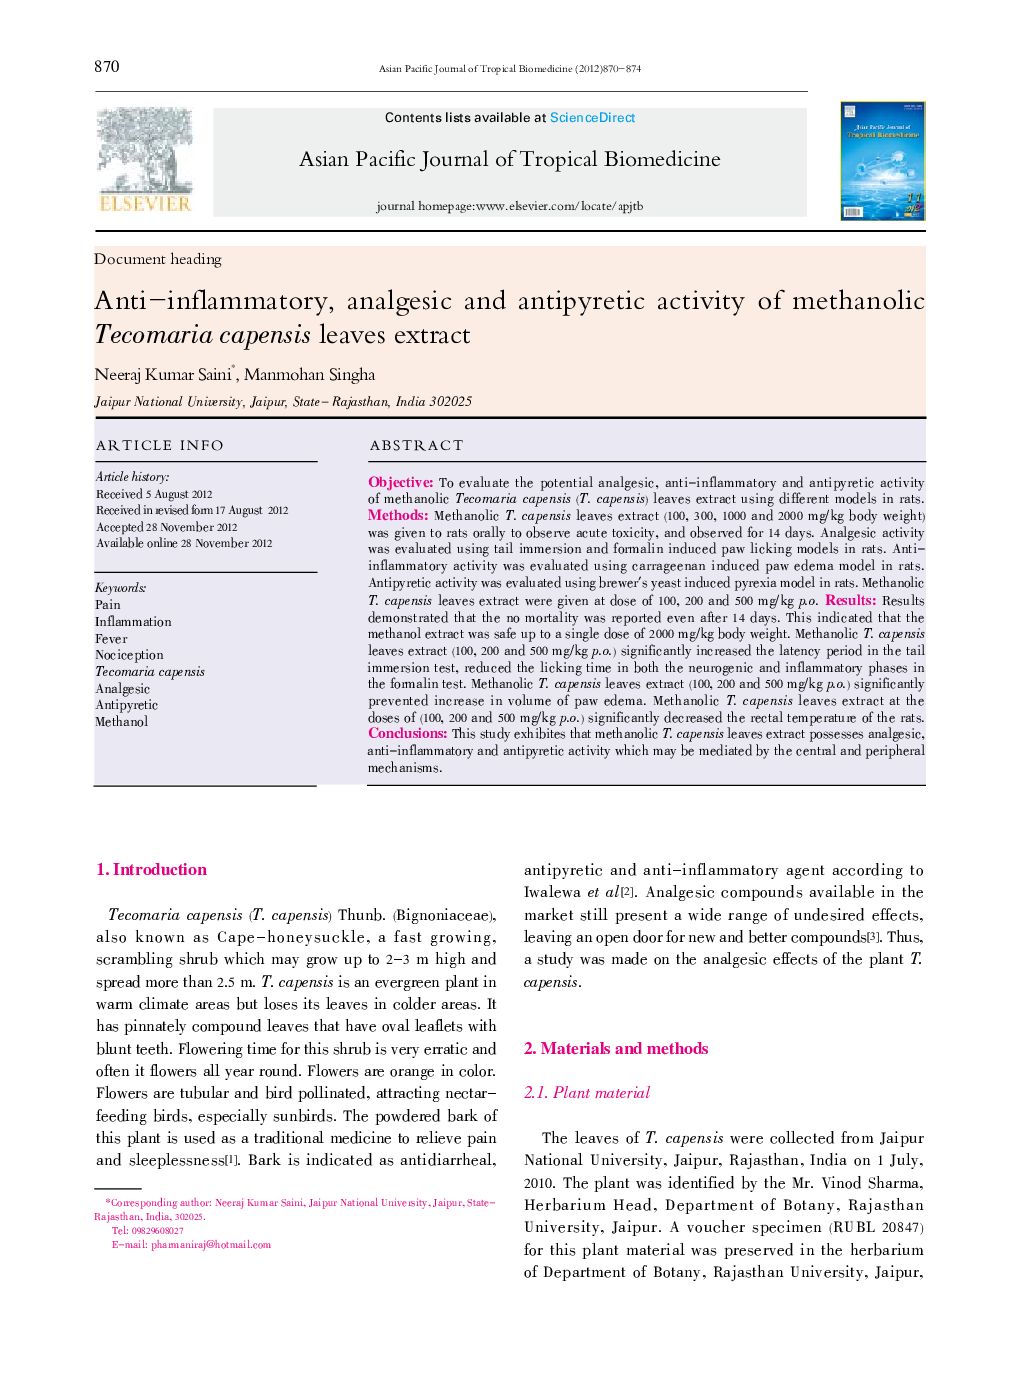 Anti-inflammatory, analgesic and antipyretic activity of methanolic Tecomaria capensis leaves extract